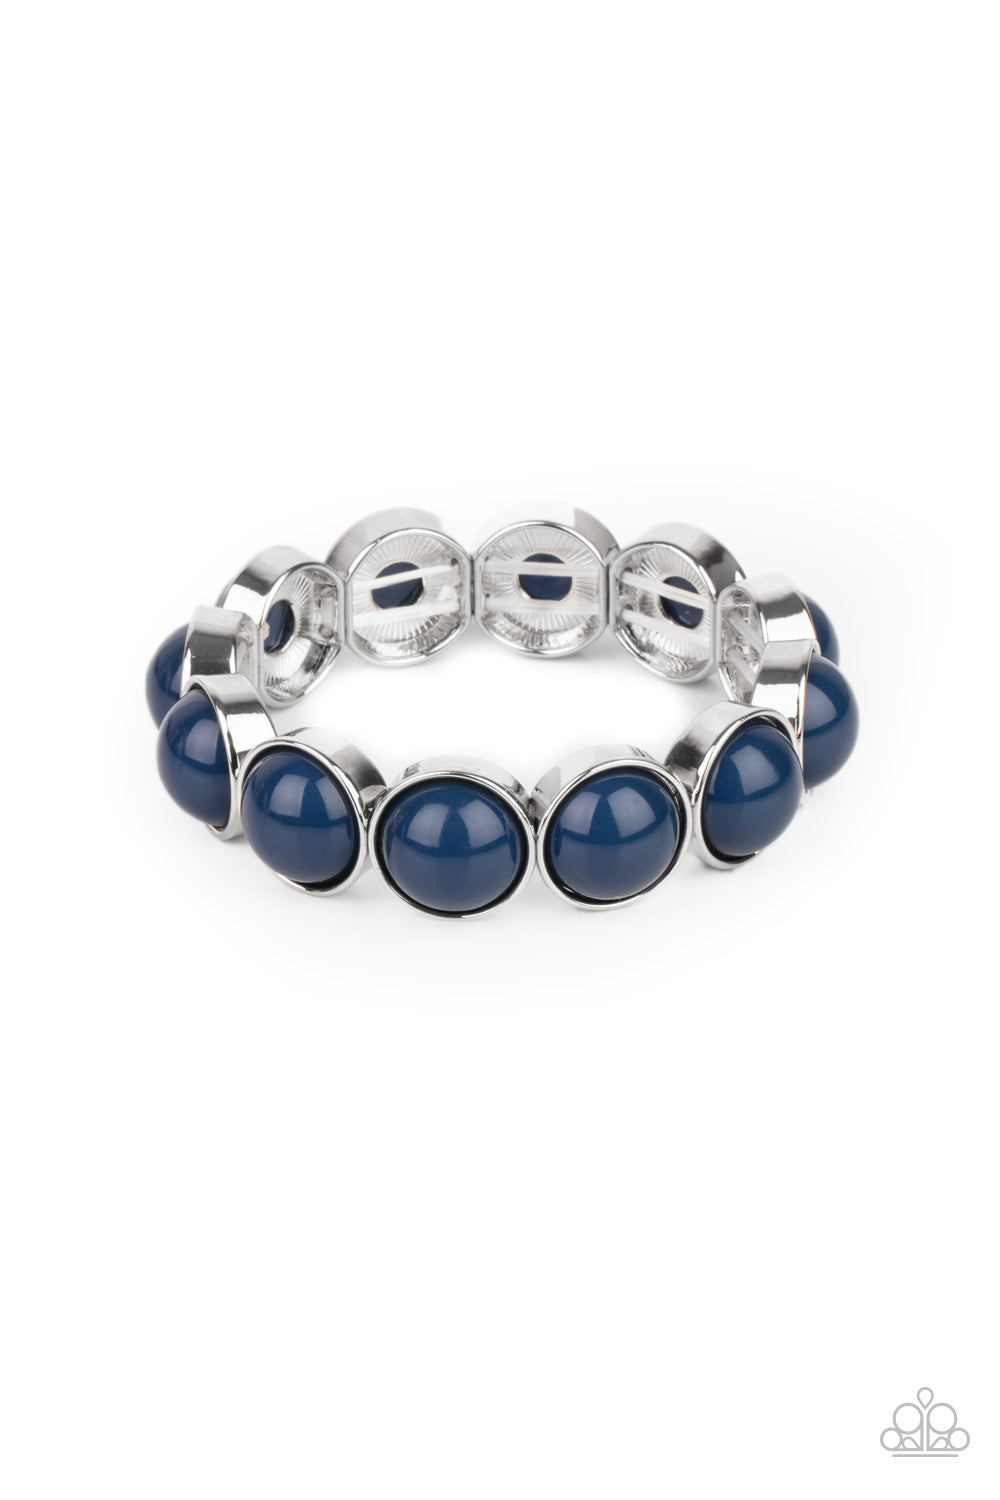 POP, Drop, and Roll - Blue bracelet 734